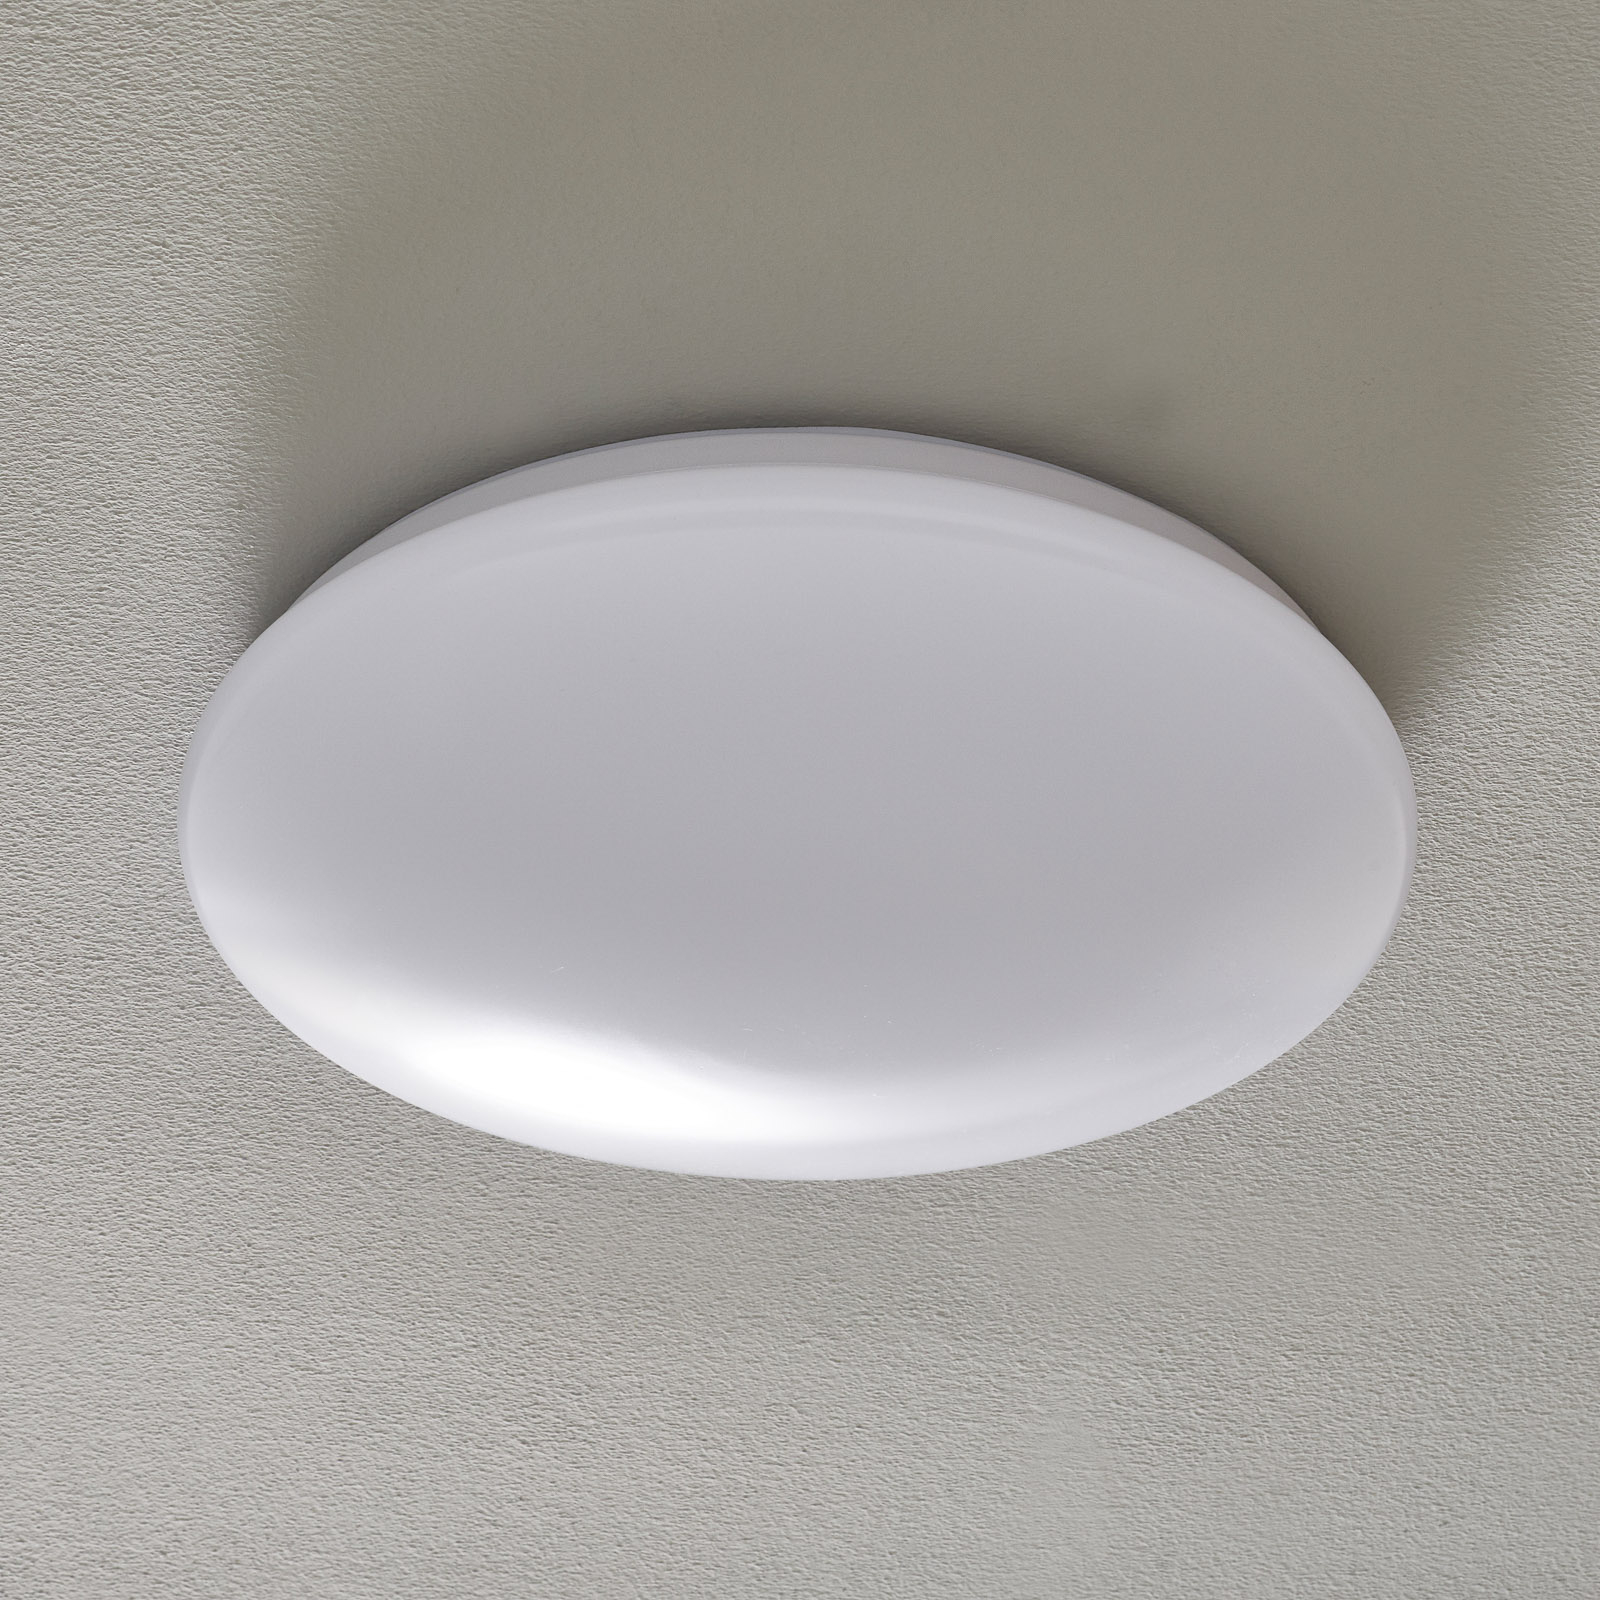 Altona LED ceiling light, Ø 38.5cm 1,950lm 4,000K